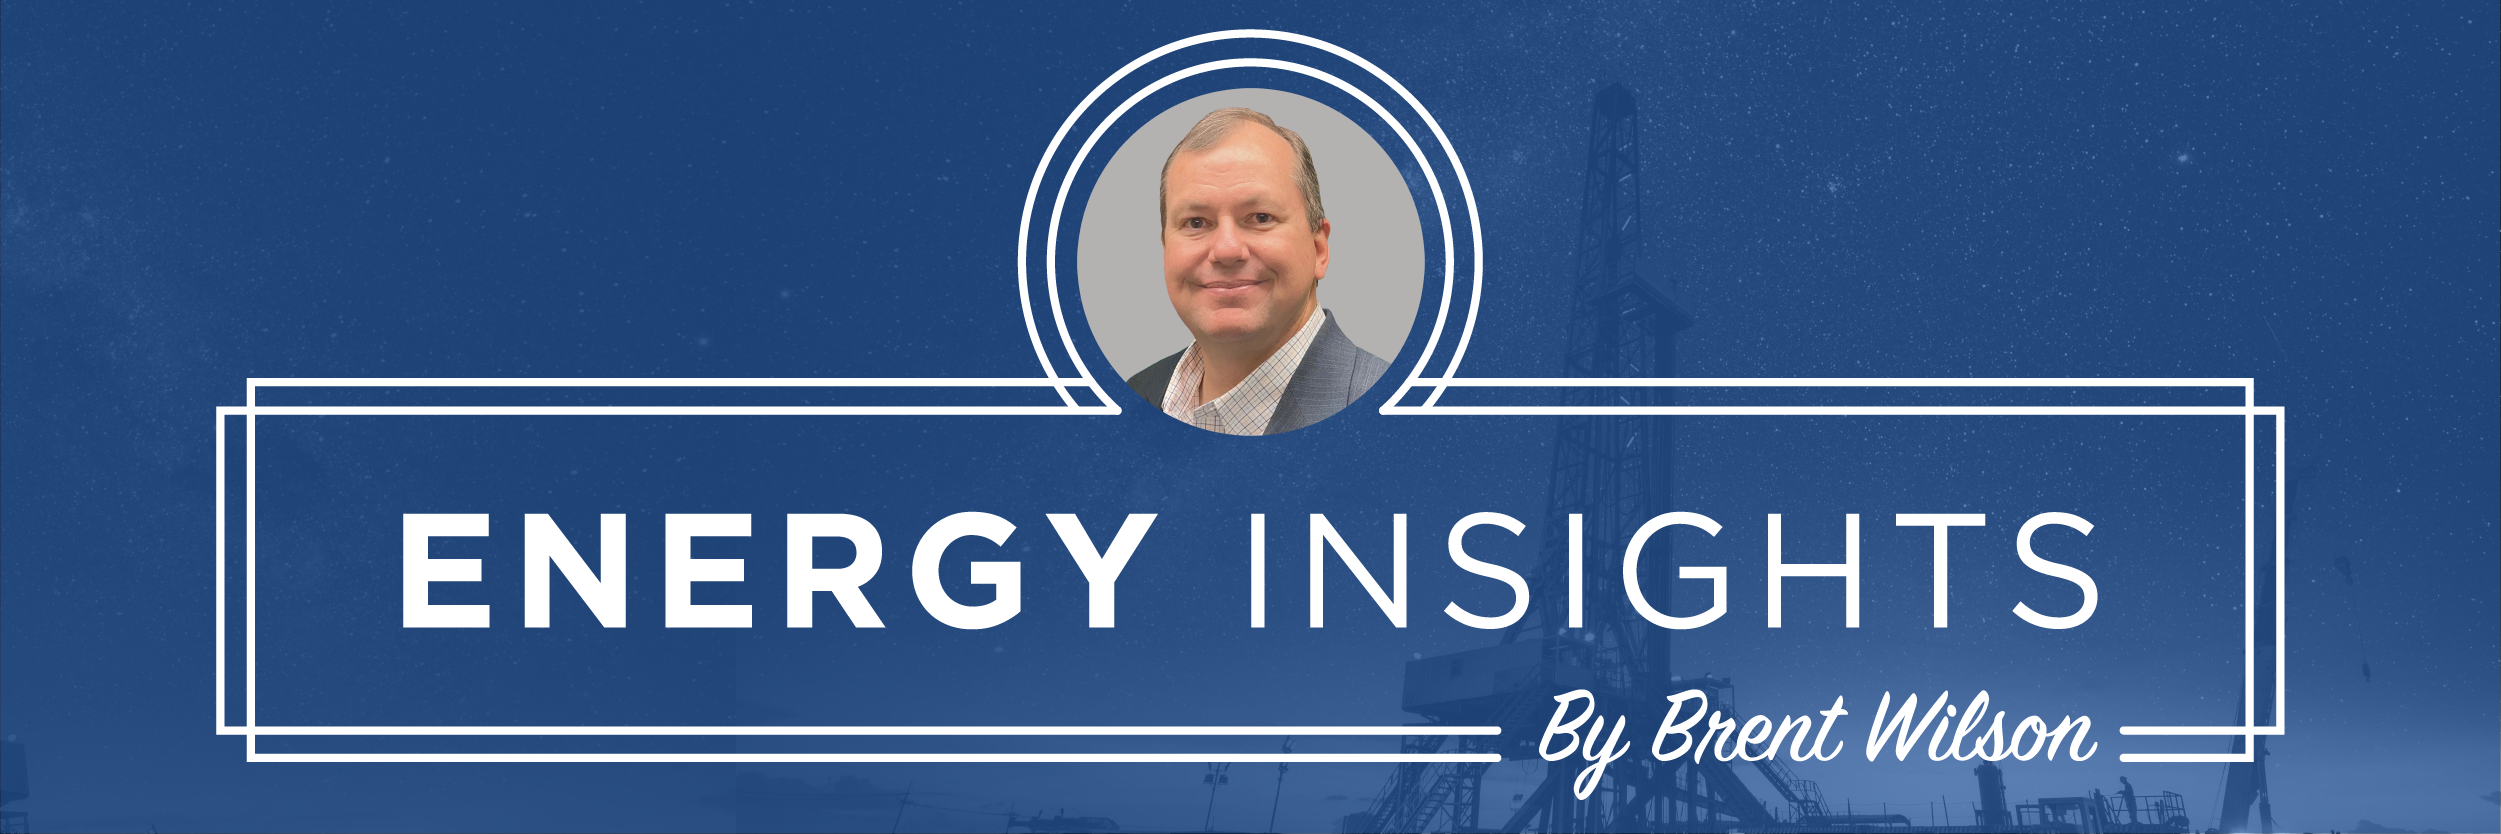 Energy Insights